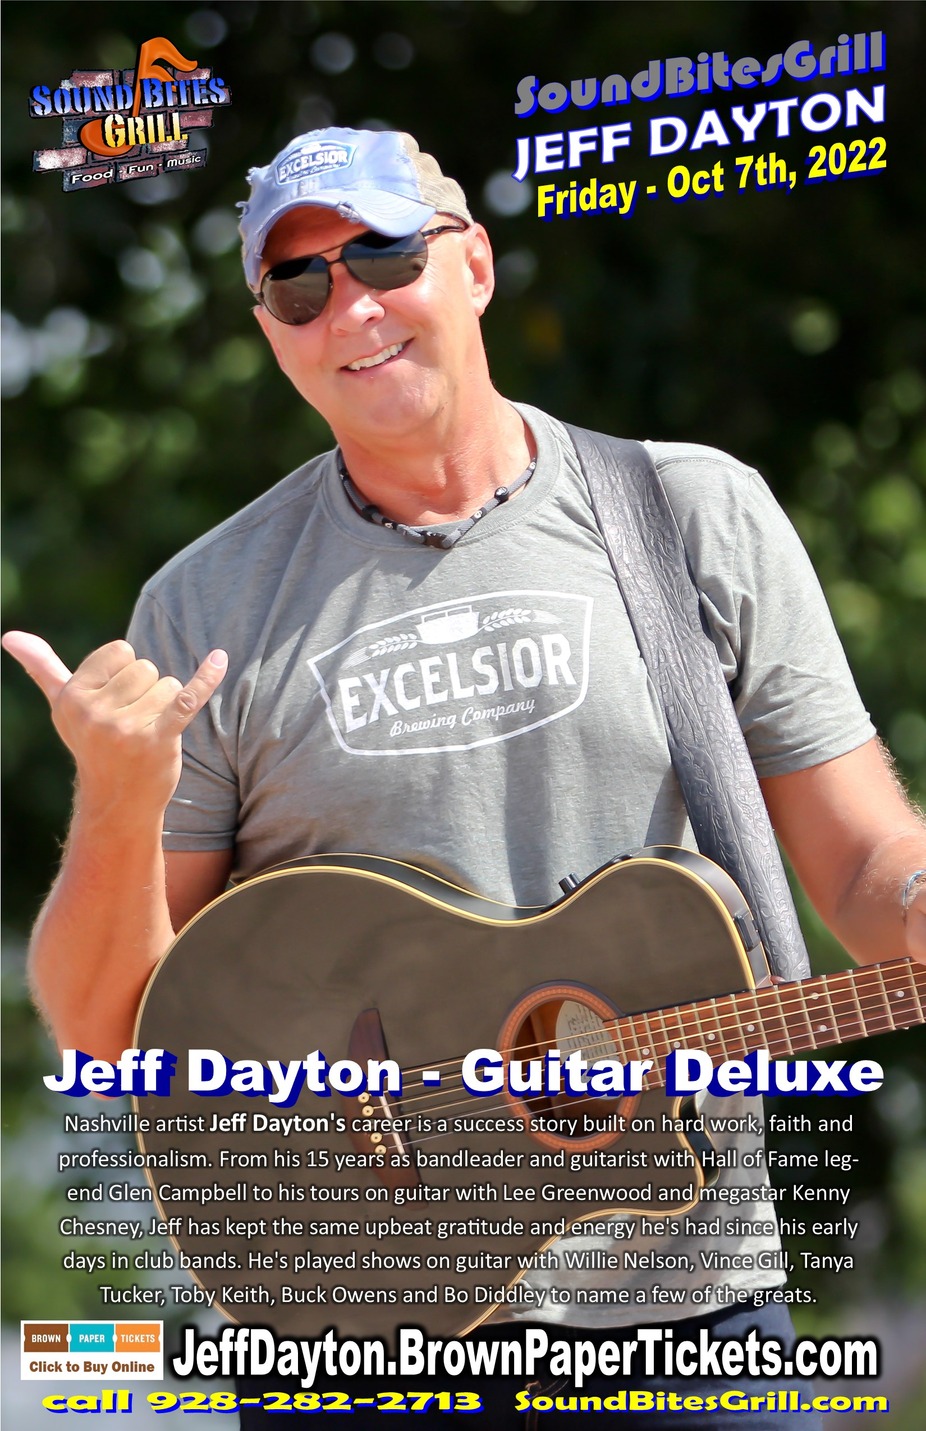 Jeff Dayton - Guitar Deluxe event photo